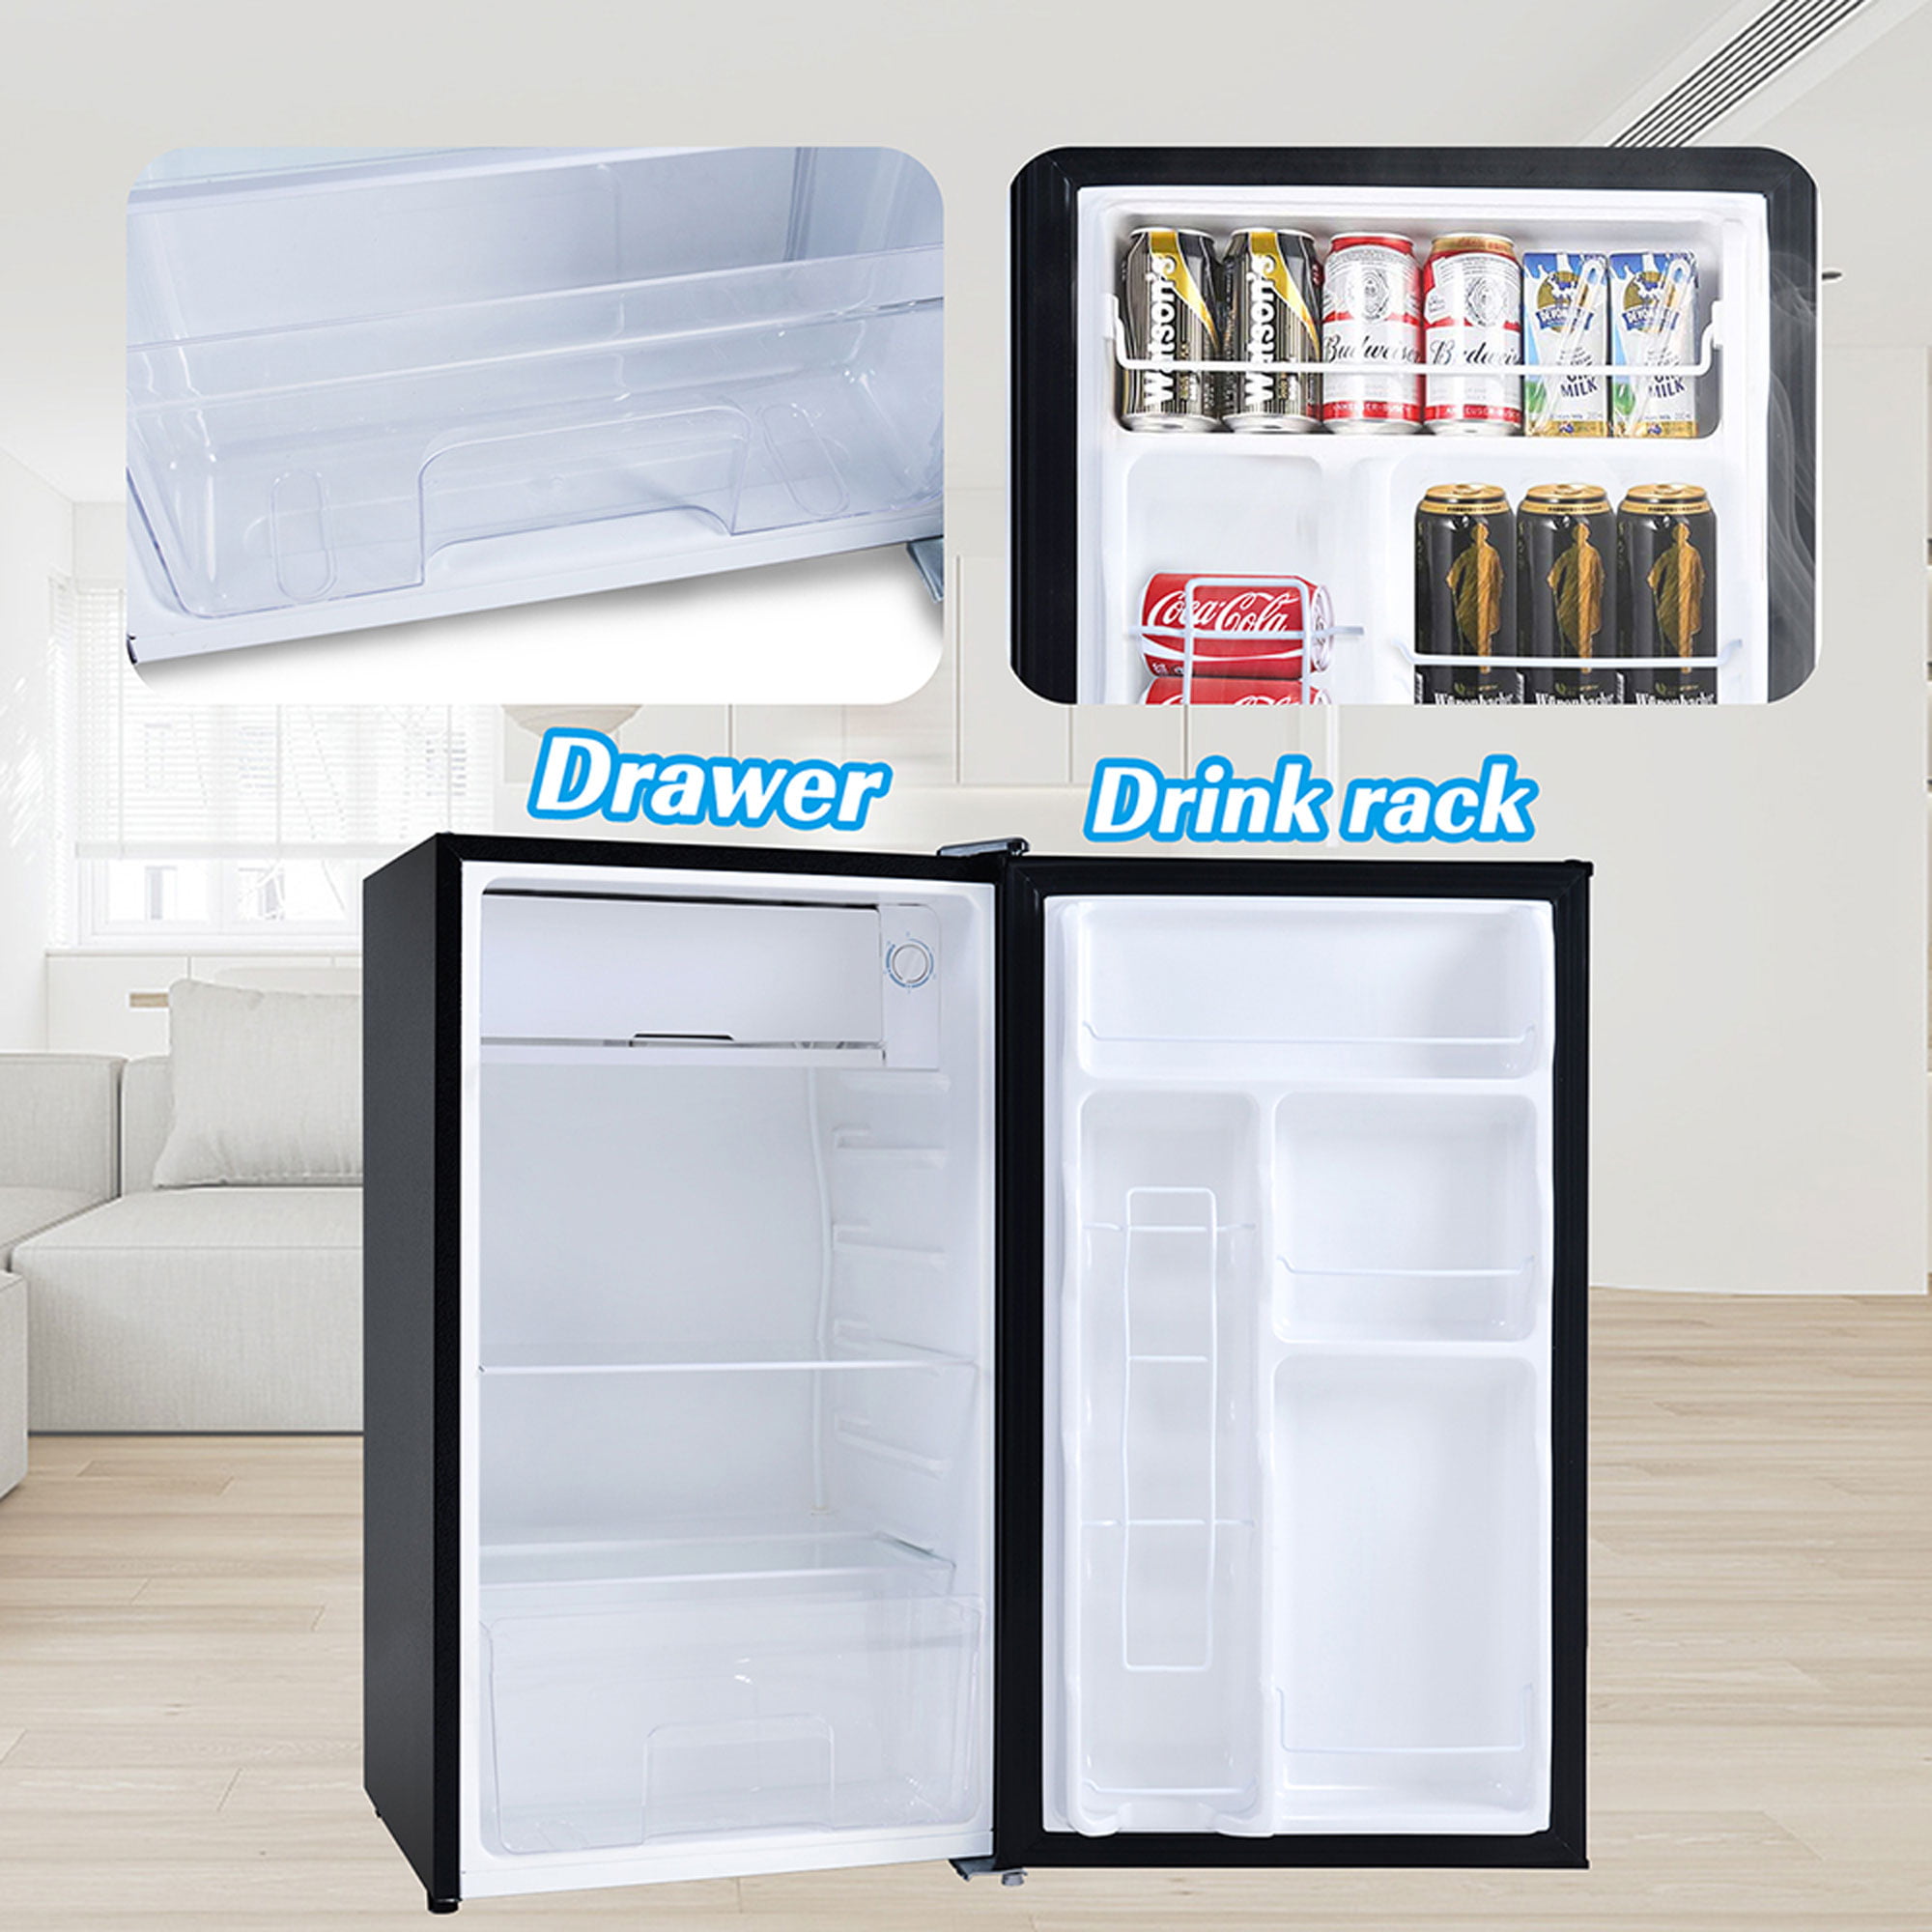 BANGSON Mini Fridge with Freezer, 3.2 CU.FT Small Refrigerator with  Freezer, Door Handle, Bottle Opener, For Bedroom, Dorm, Office, Home,  Garage or